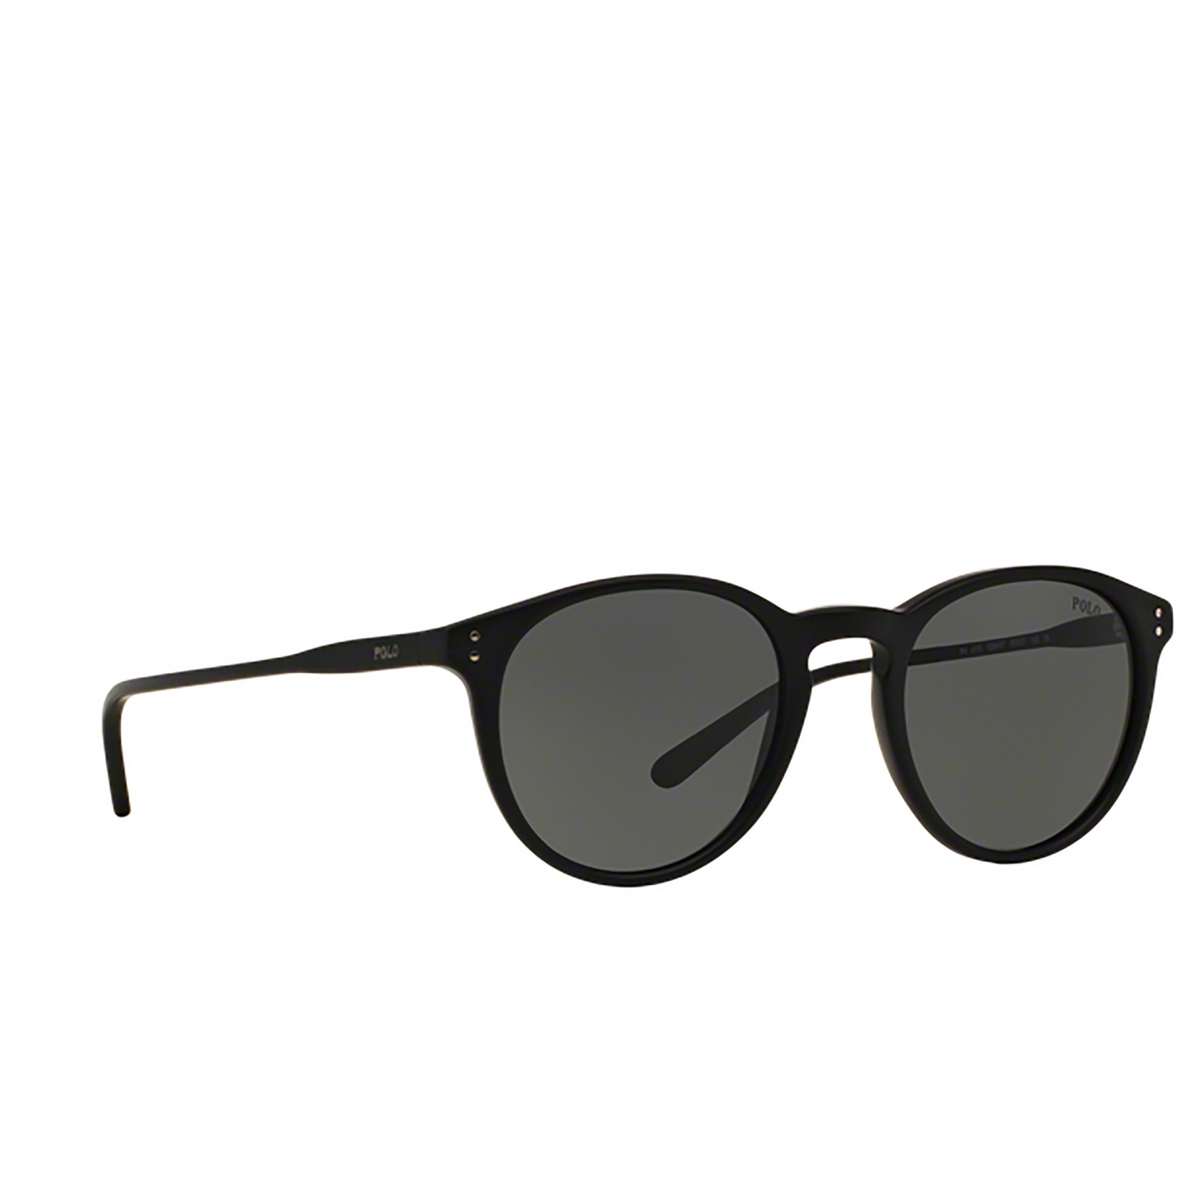 Polo Ralph Lauren® Round Sunglasses: PH4110 color Matte Black 528487 - three-quarters view.